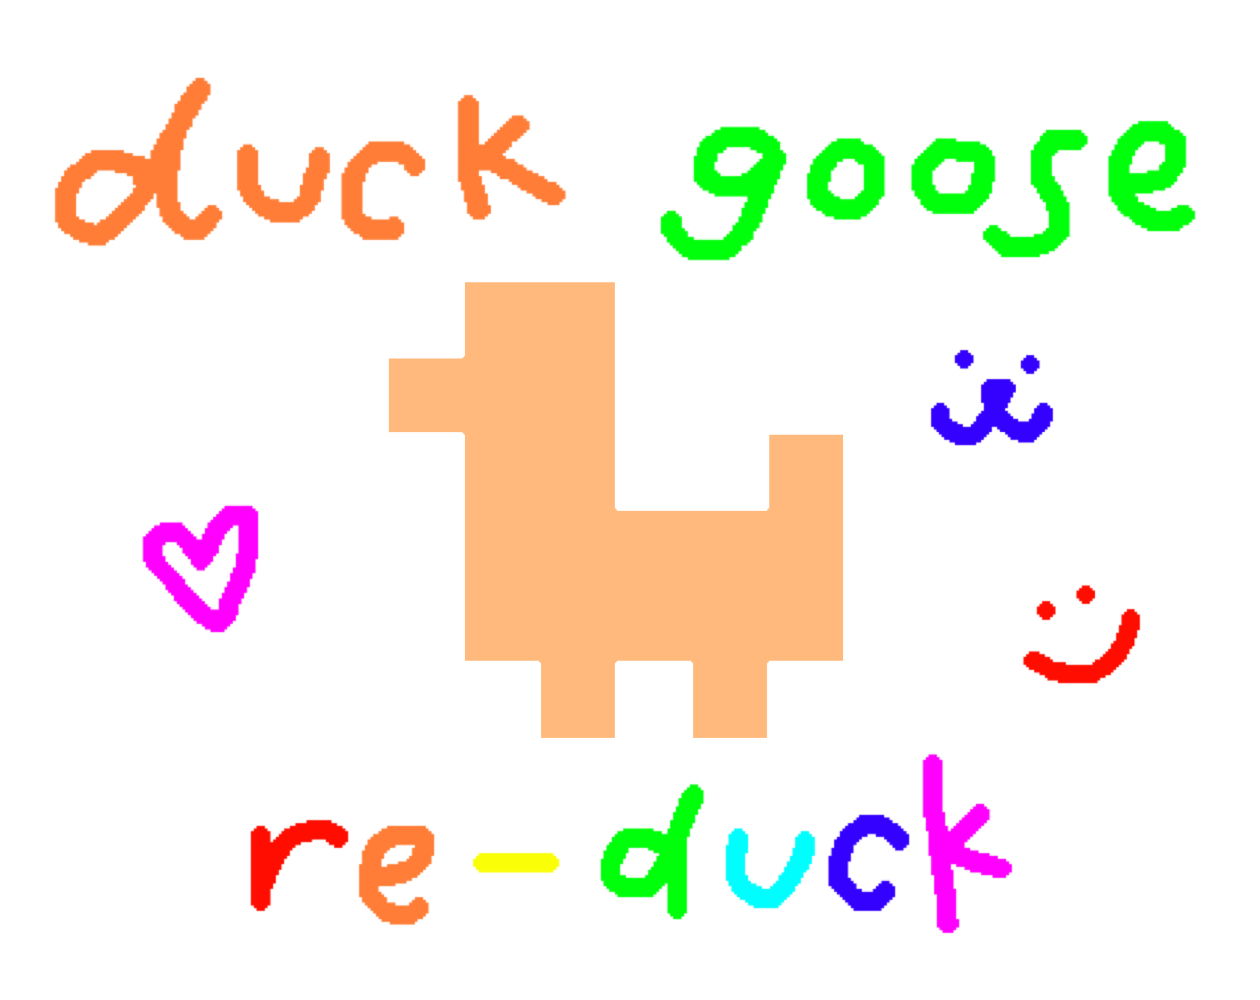 goose goose duck unlocks